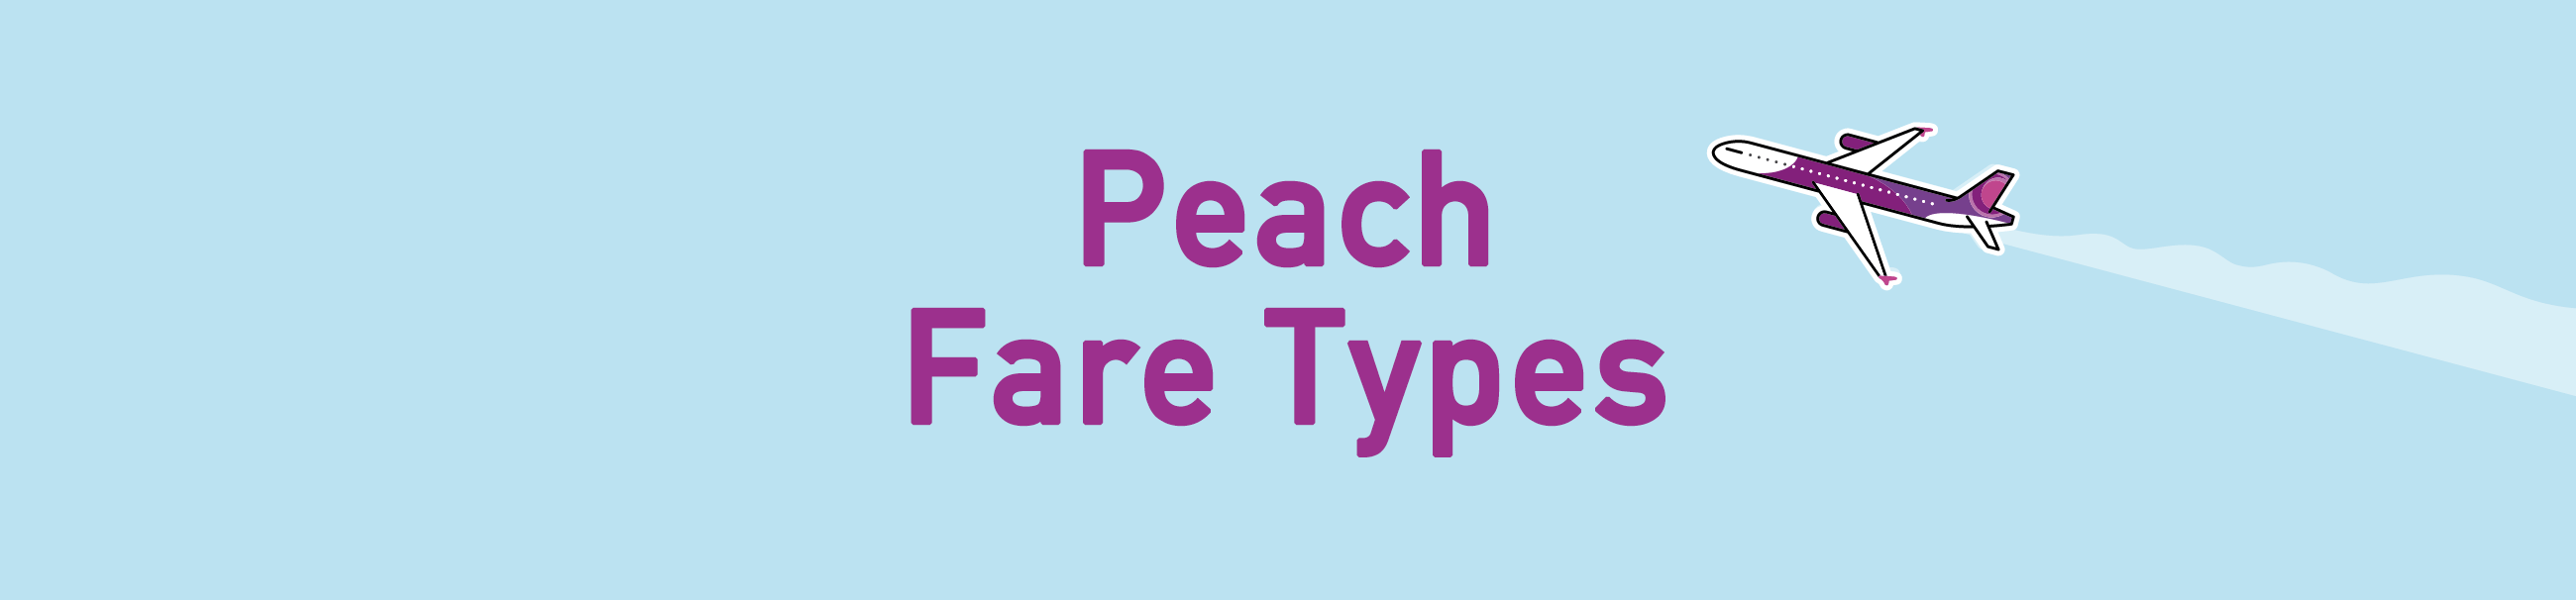 Peach Fare Types